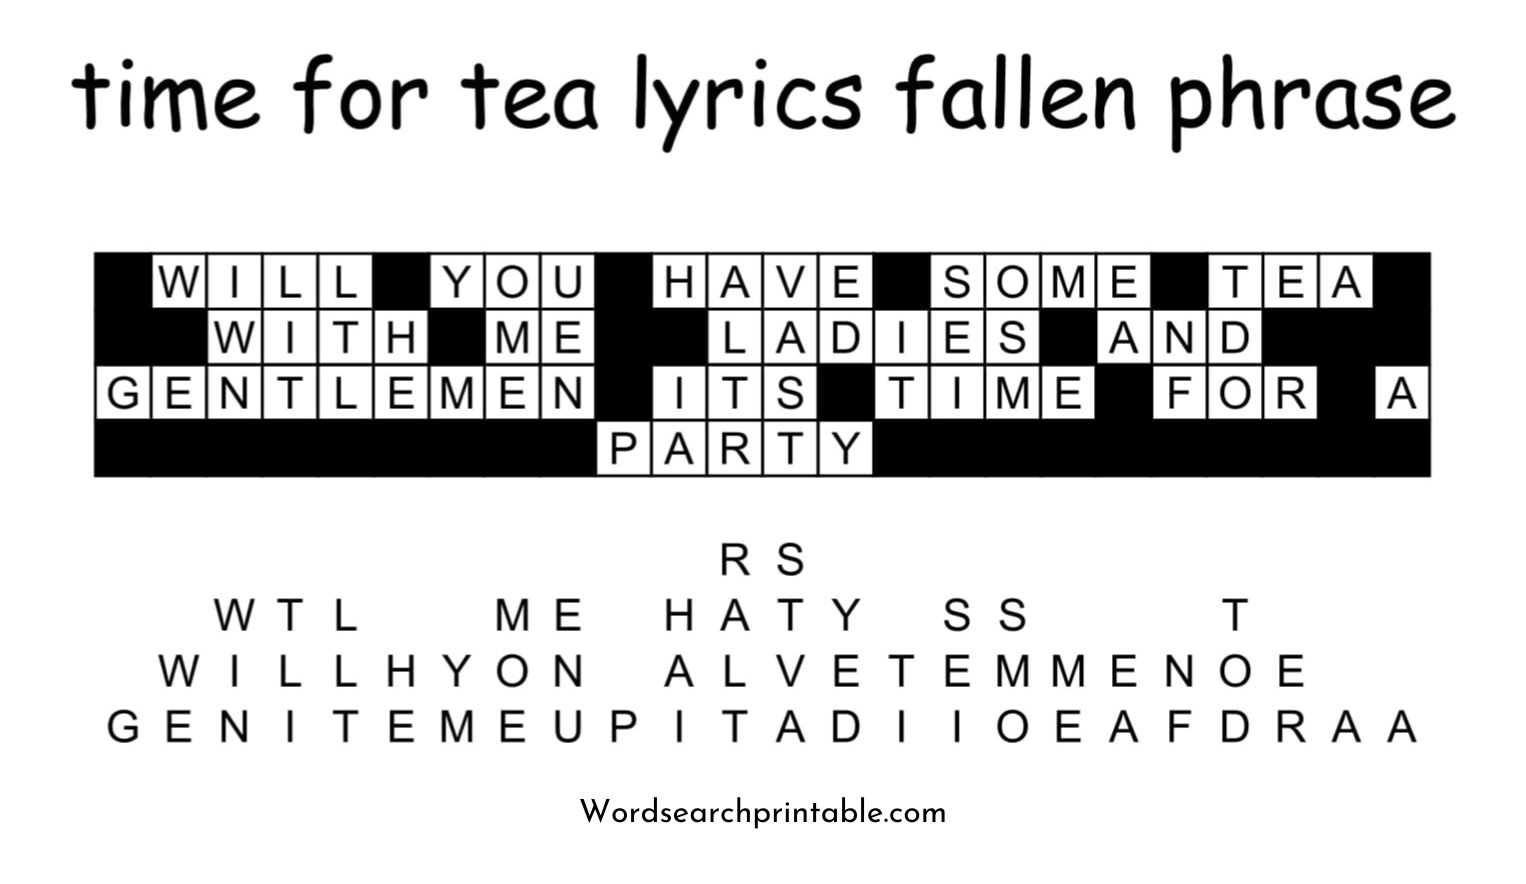 time for tea lyrics fallen phrase solution